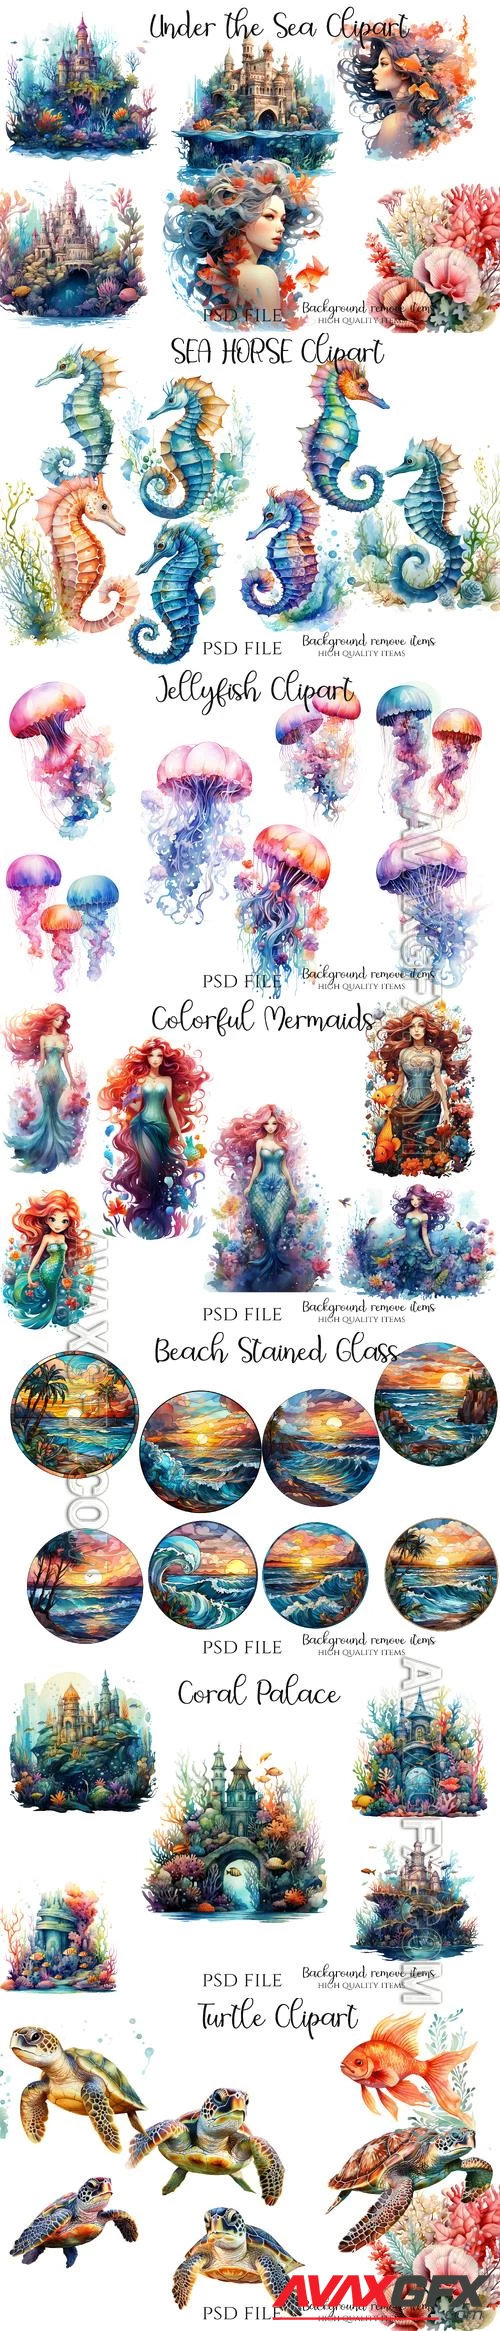 Sea creatures and elements, mermaids, seahorse, turtle, corals, seascape - PSD illustration cliparts set